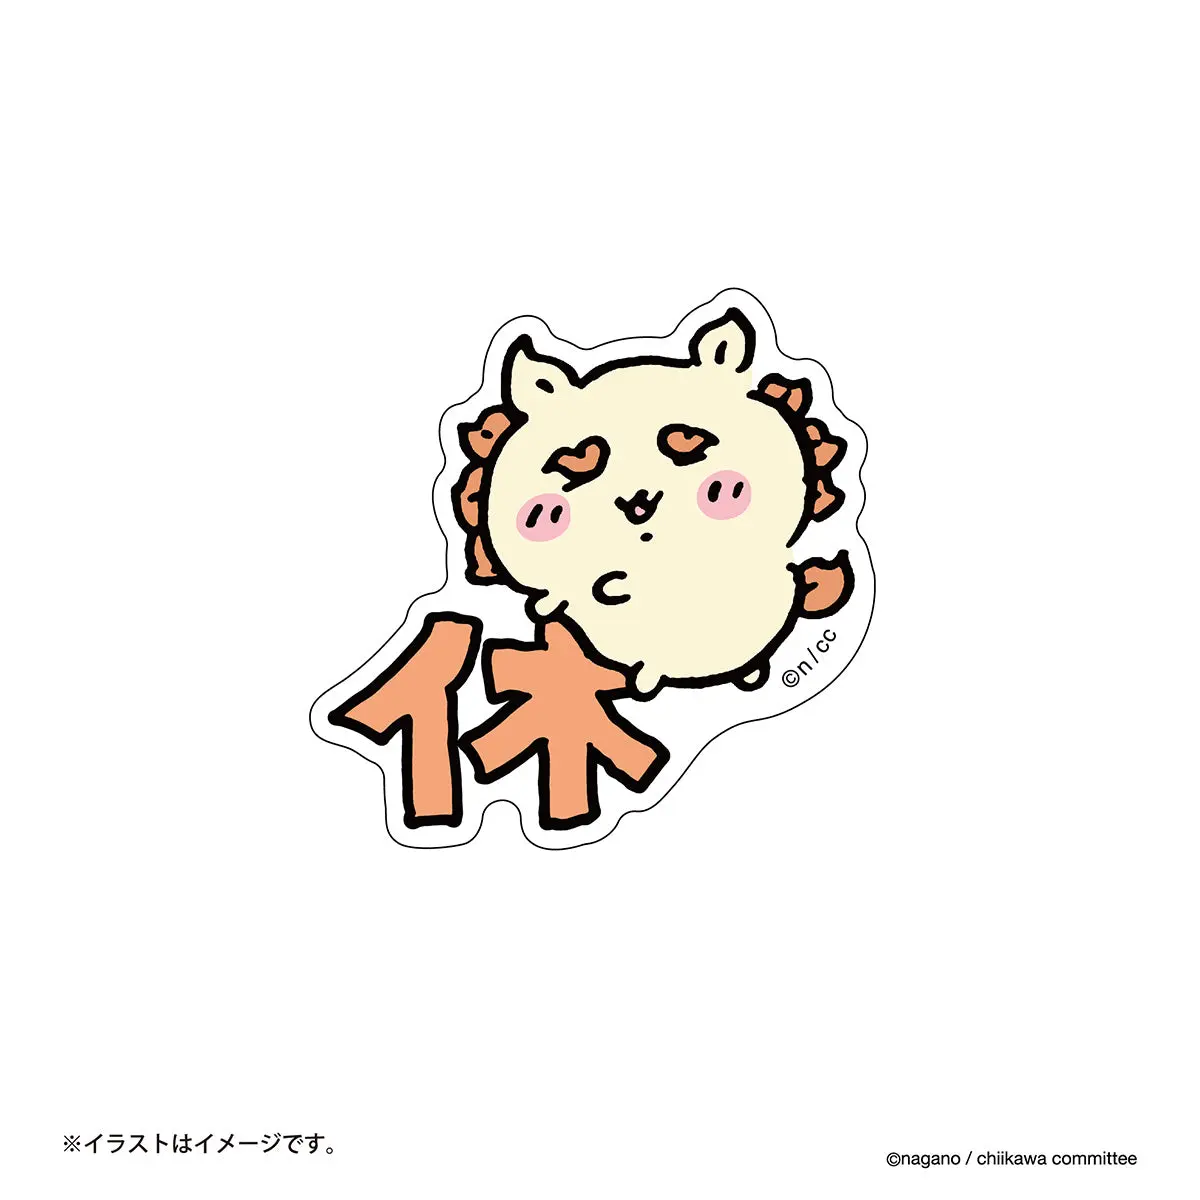 Chiikawa Stickers Just right for Smartphone - Chiikawa / Shisa